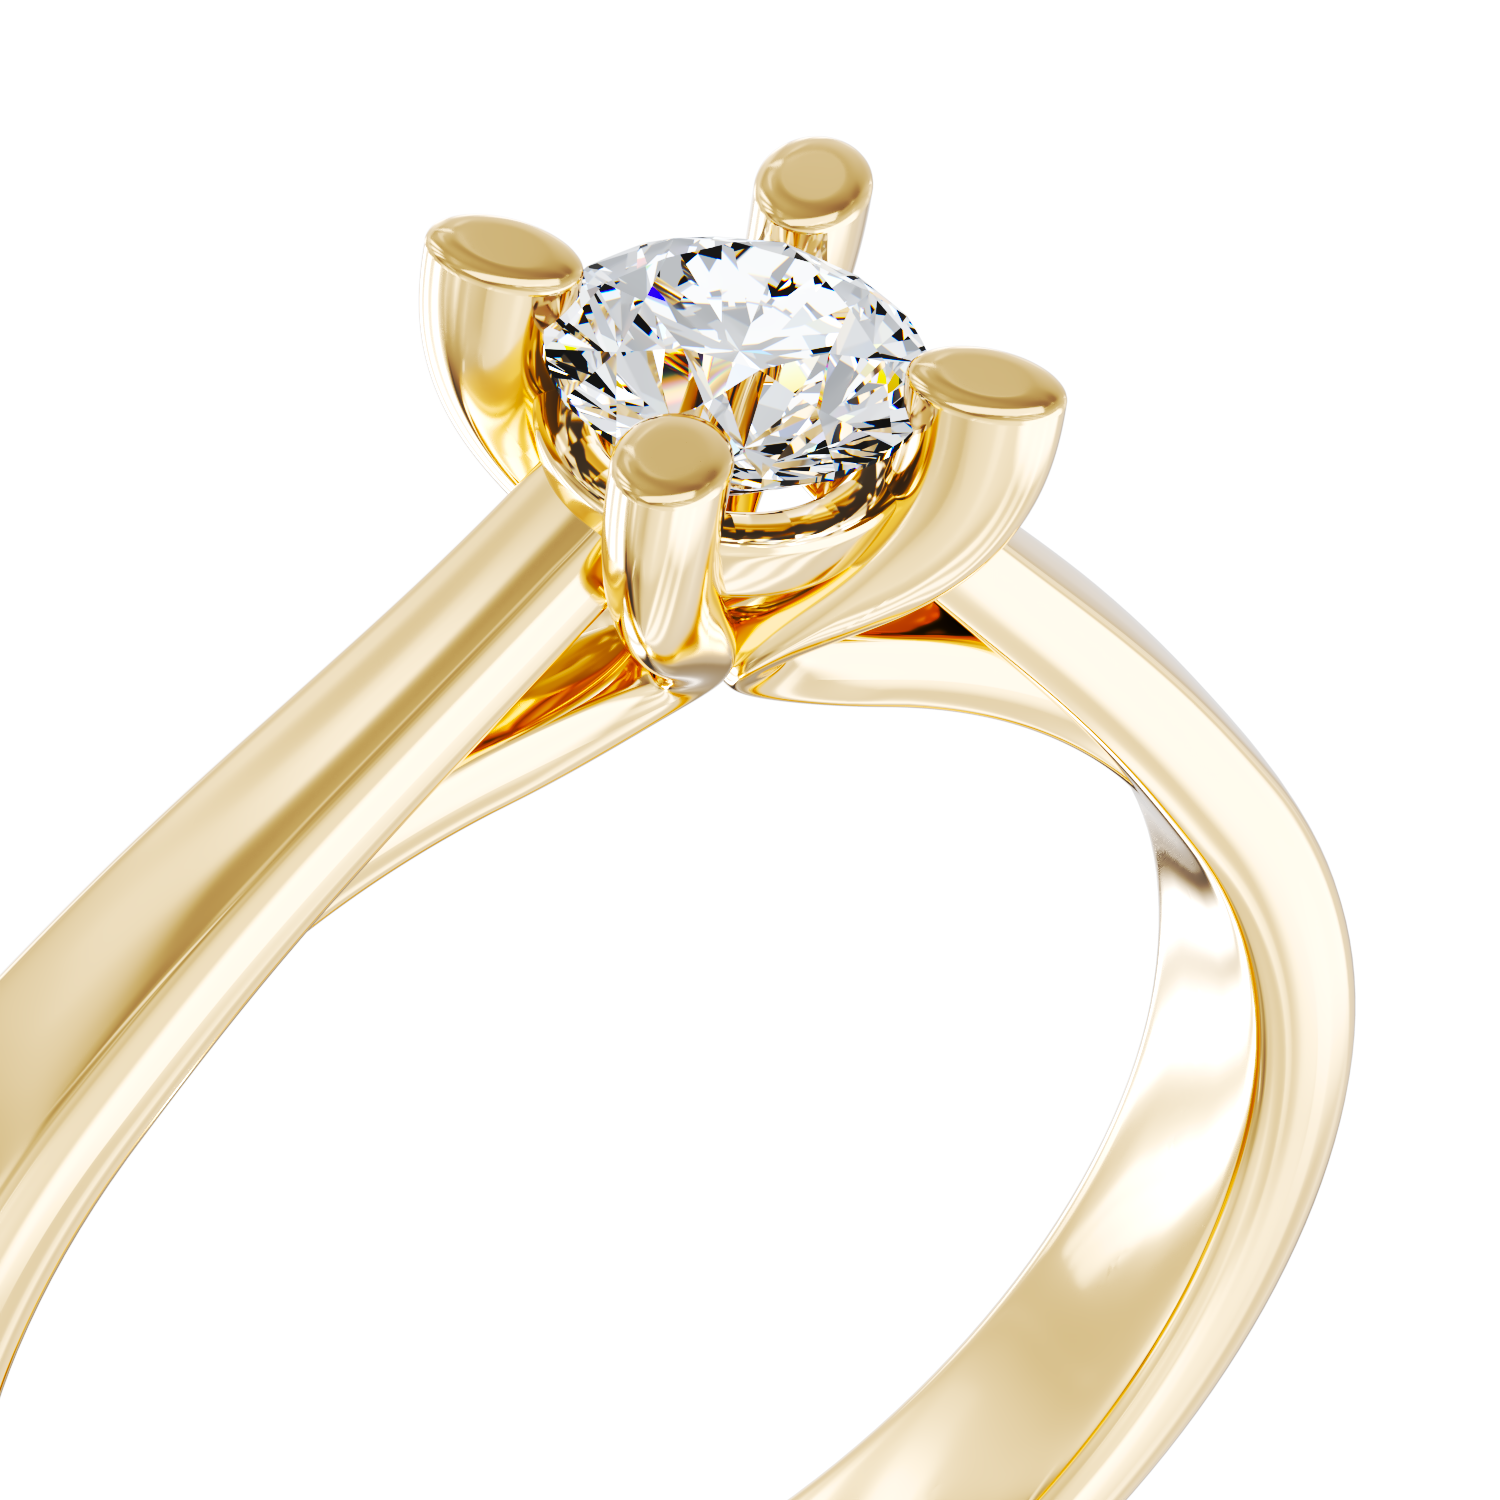 Inel de logodna din aur galben de 14K cu un diamant solitaire de 0.15ct